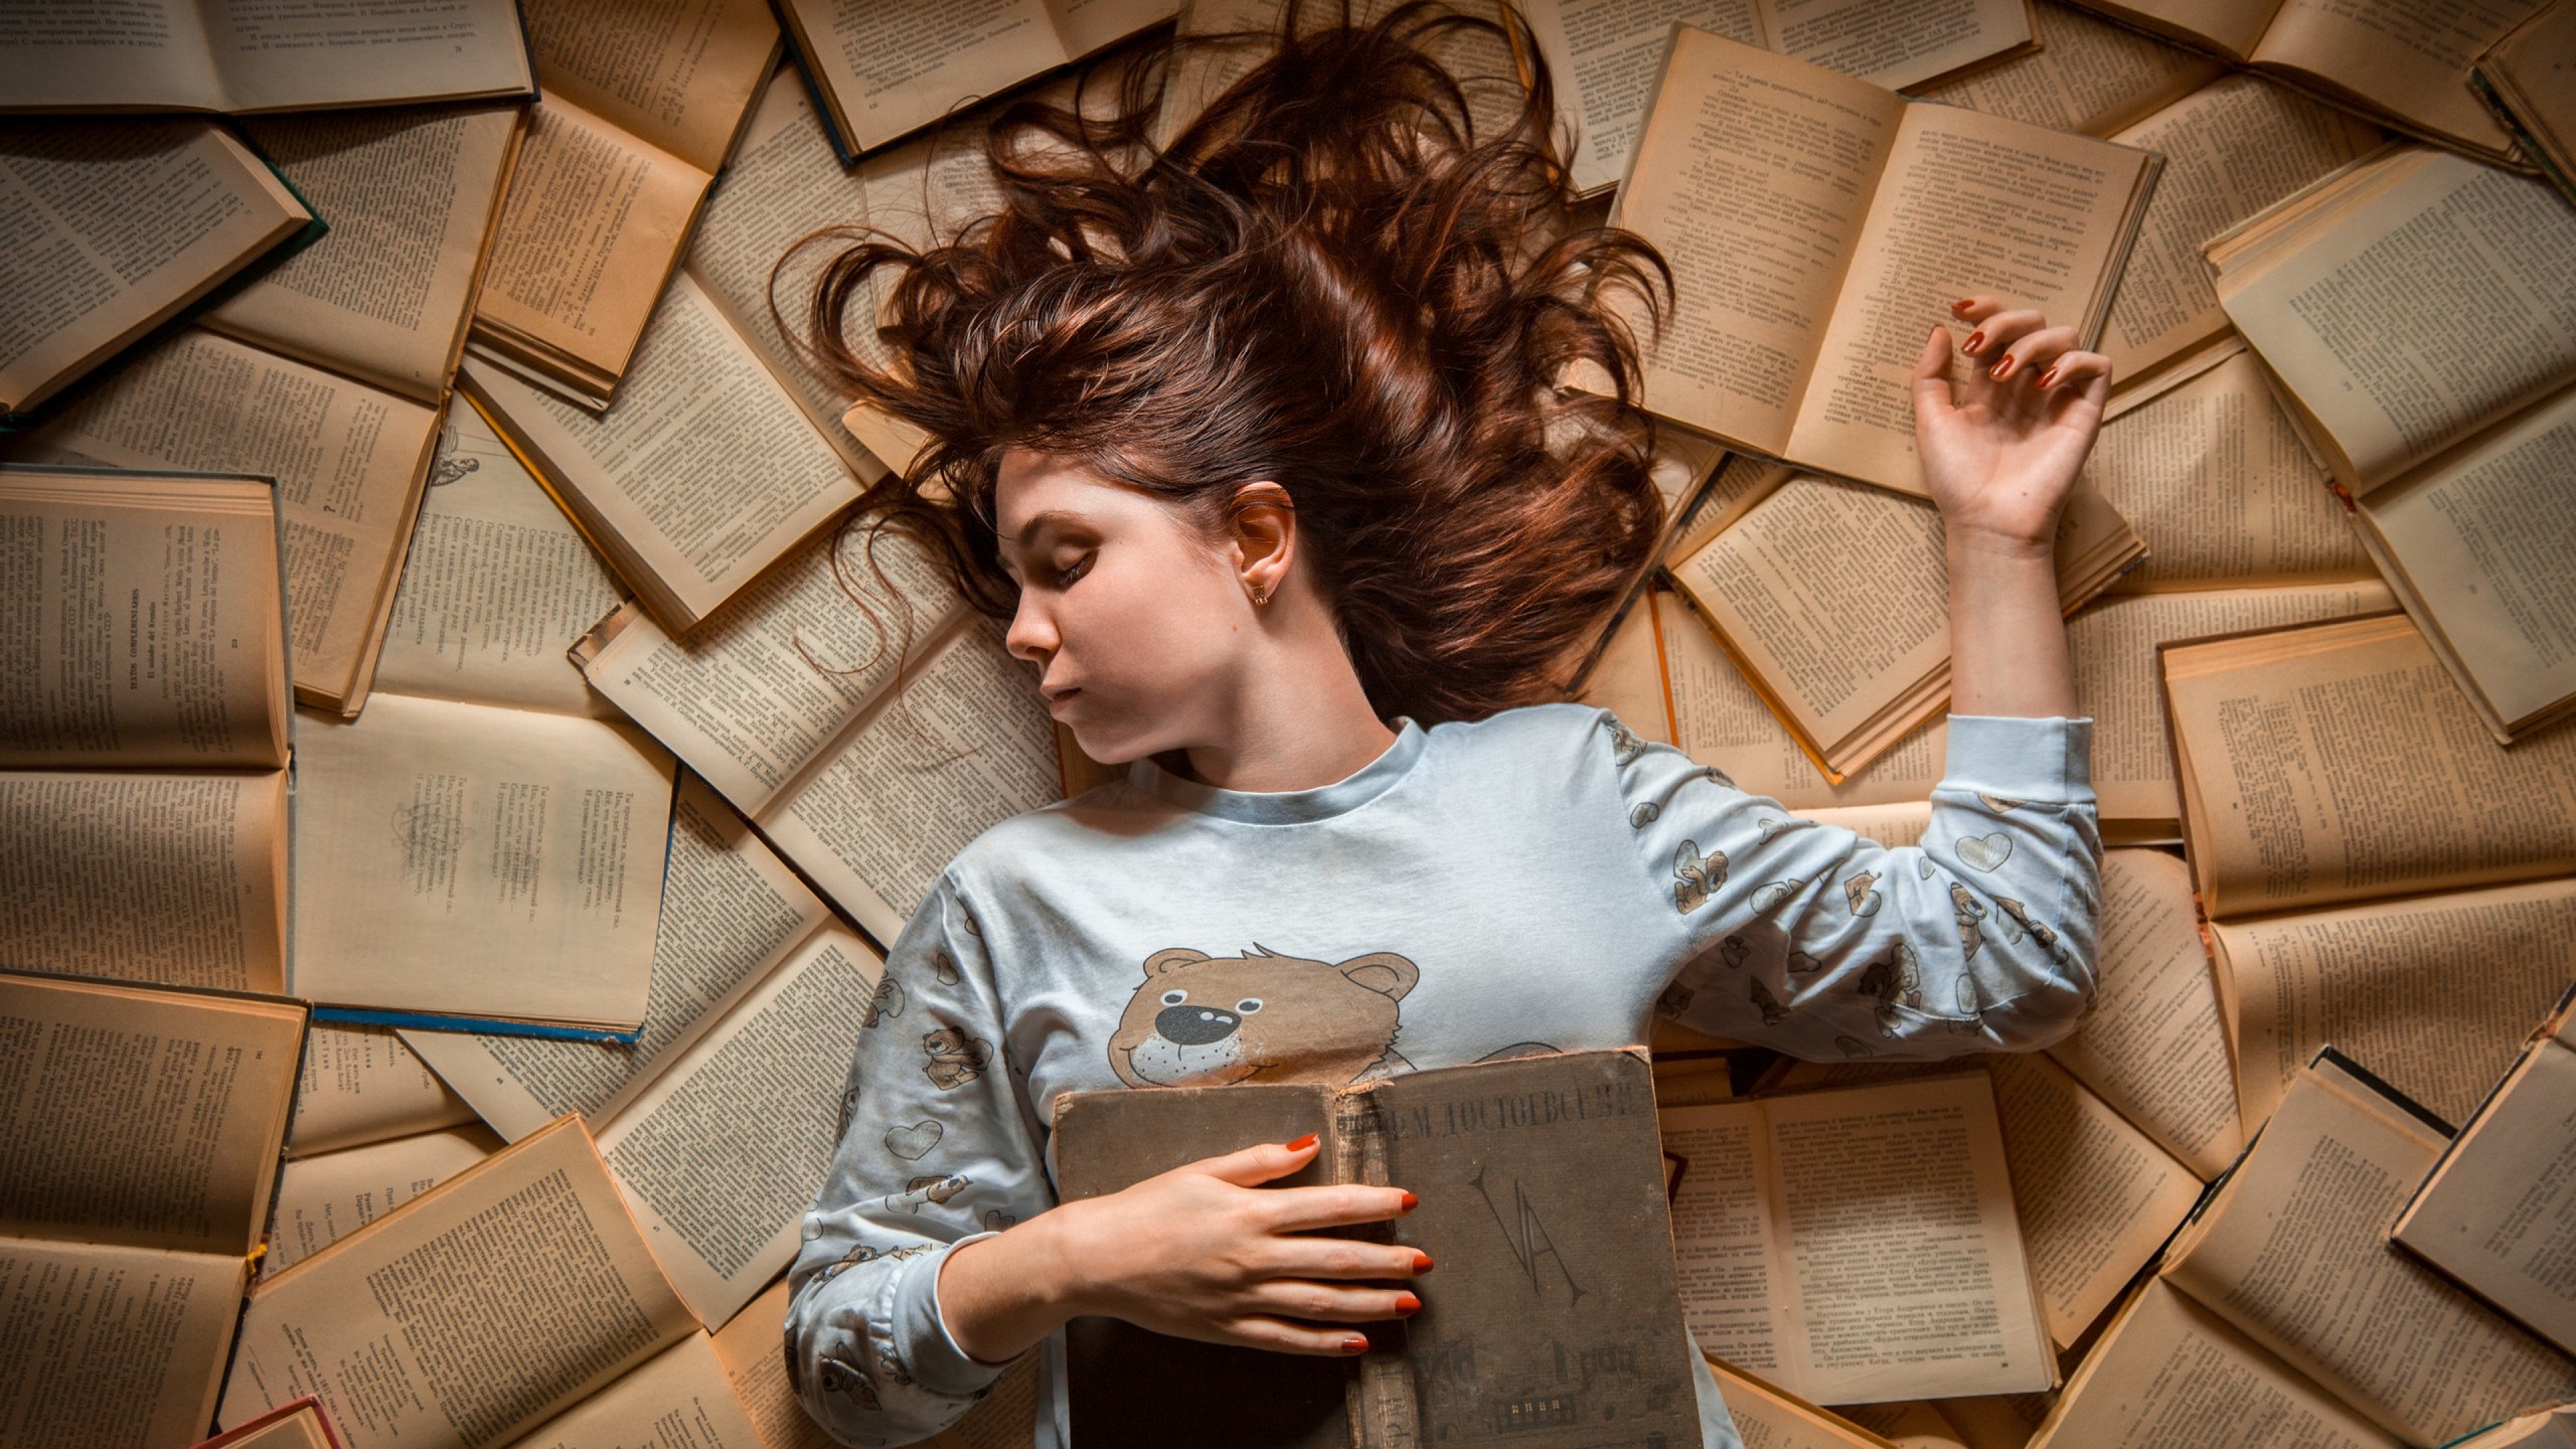 Сон книги много. Девушка с книгой. Фотосессия с книгой. Фотосессия на фоне книг. Творческая фотосессия.